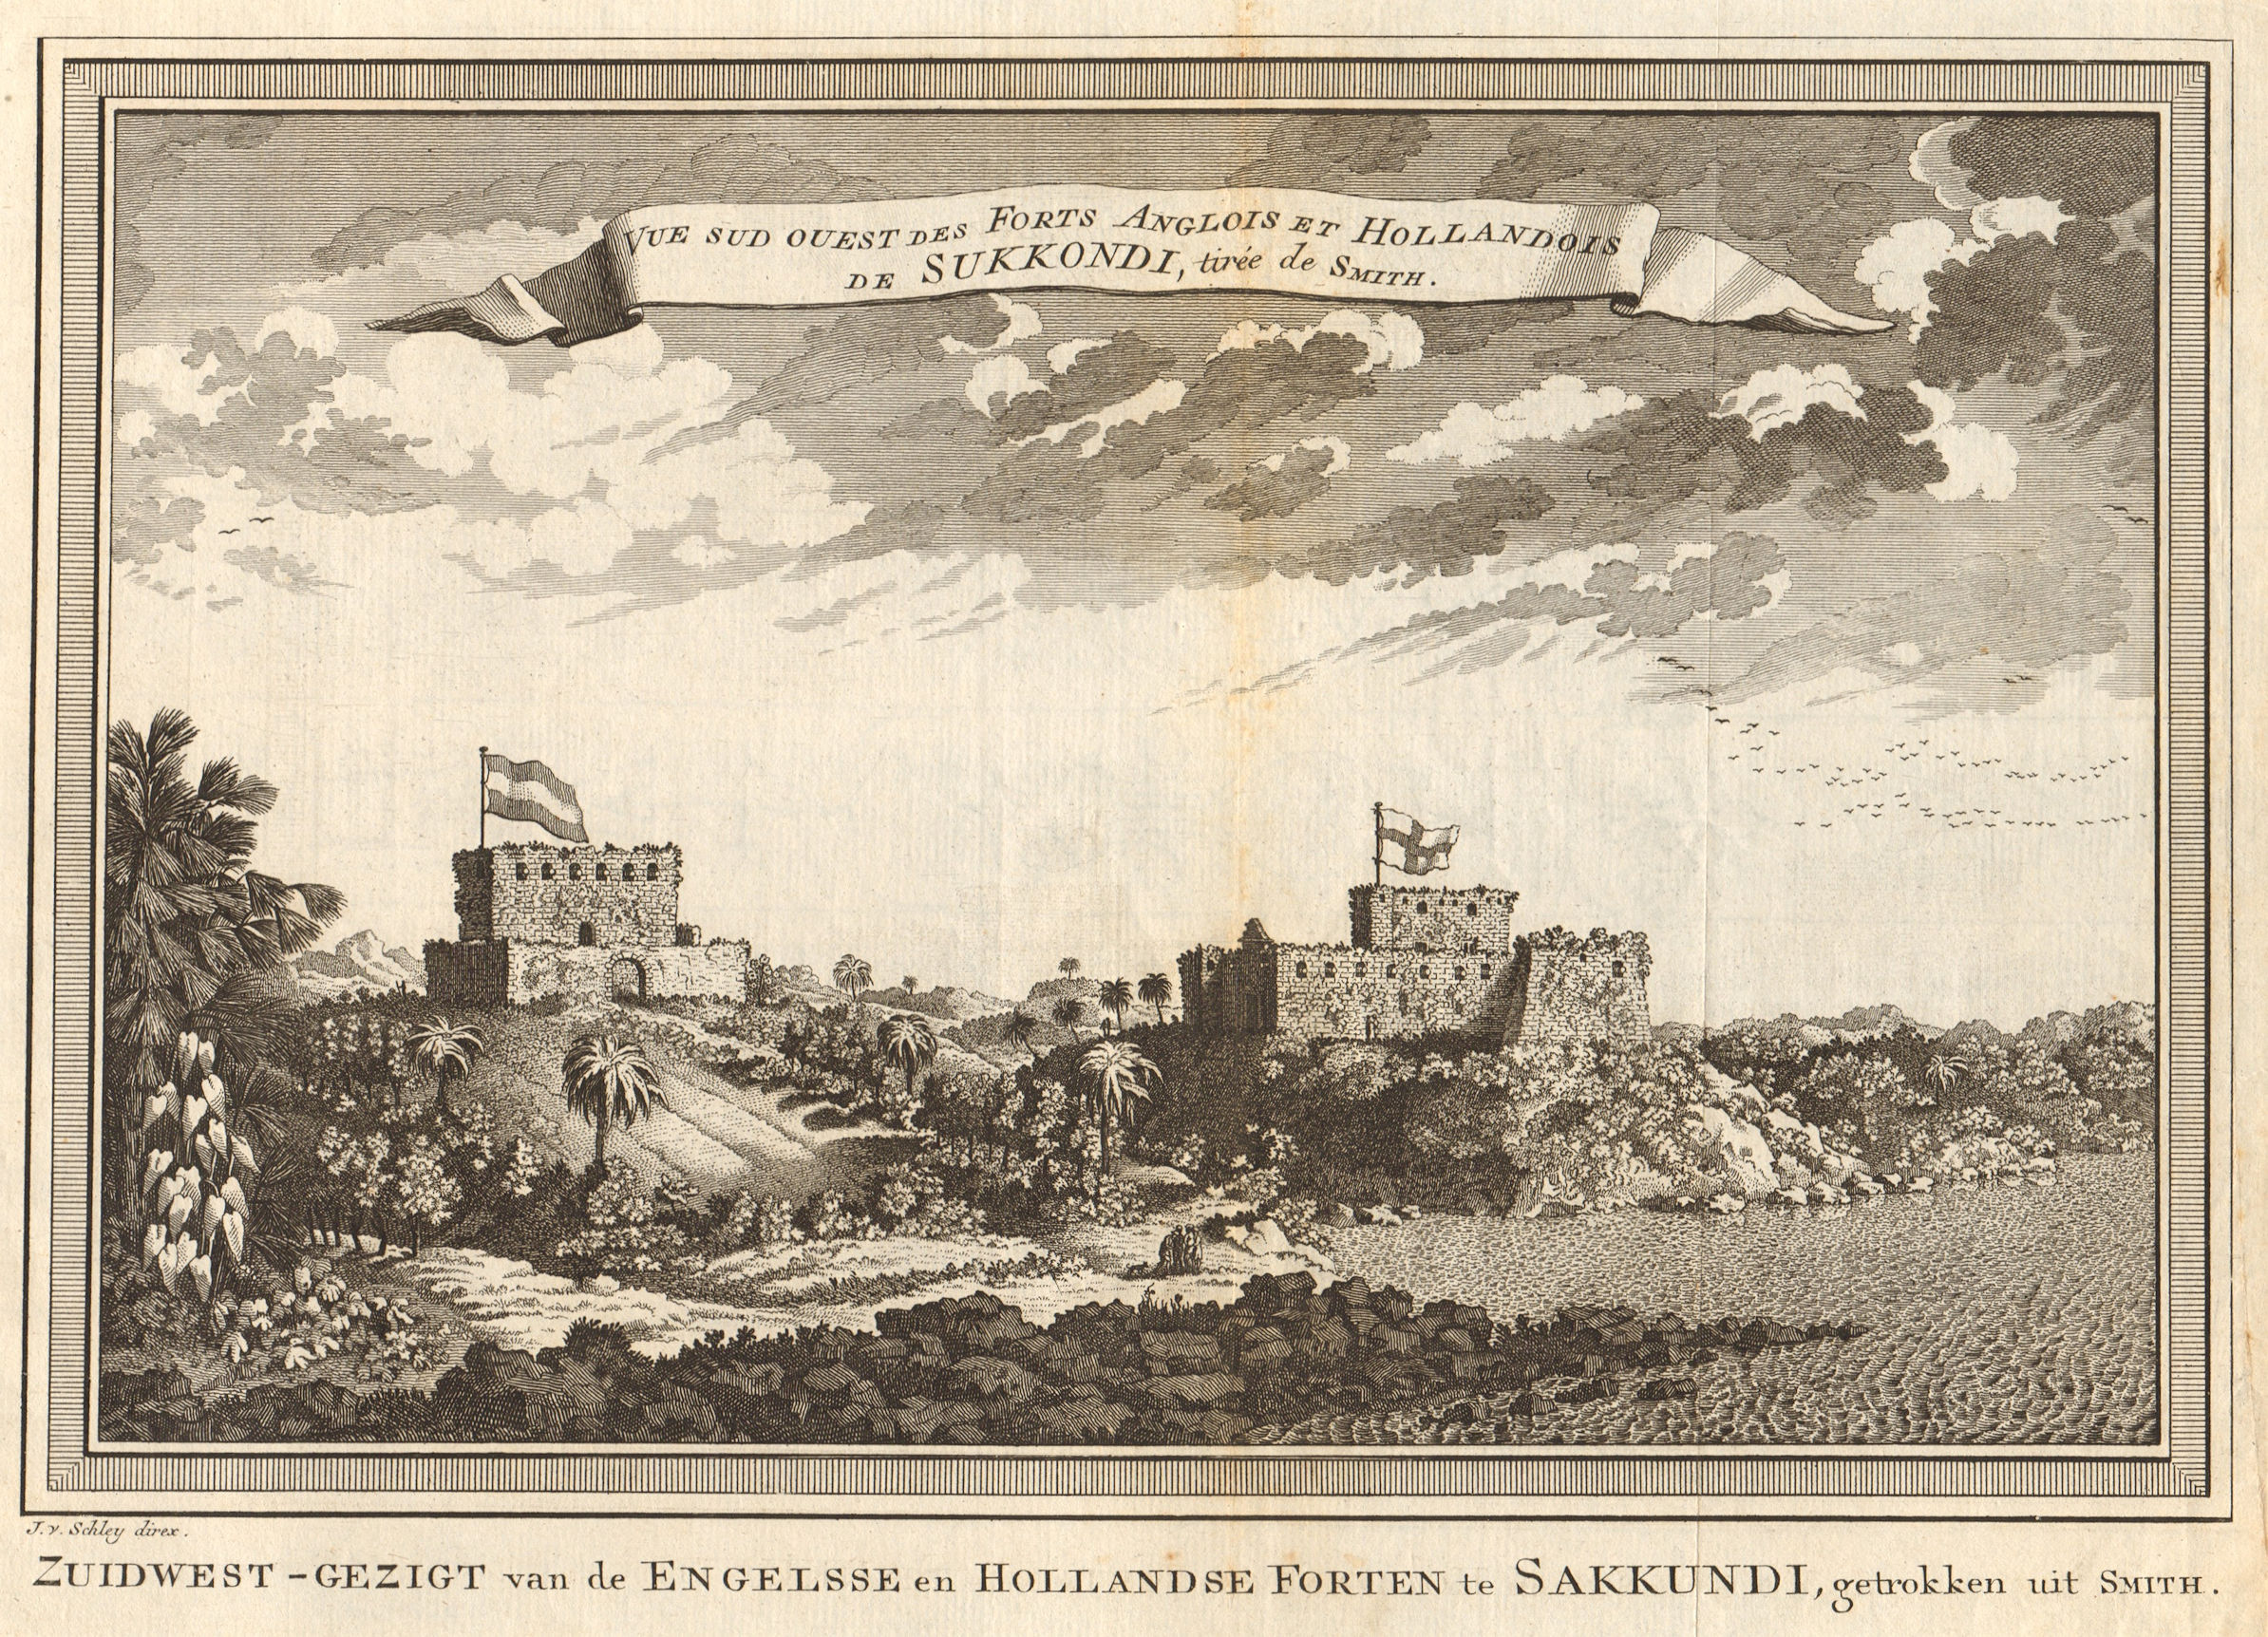 Associate Product View of English Fort Sekondi & Dutch Fort Orange, Takoradi, Ghana. SCHLEY 1748